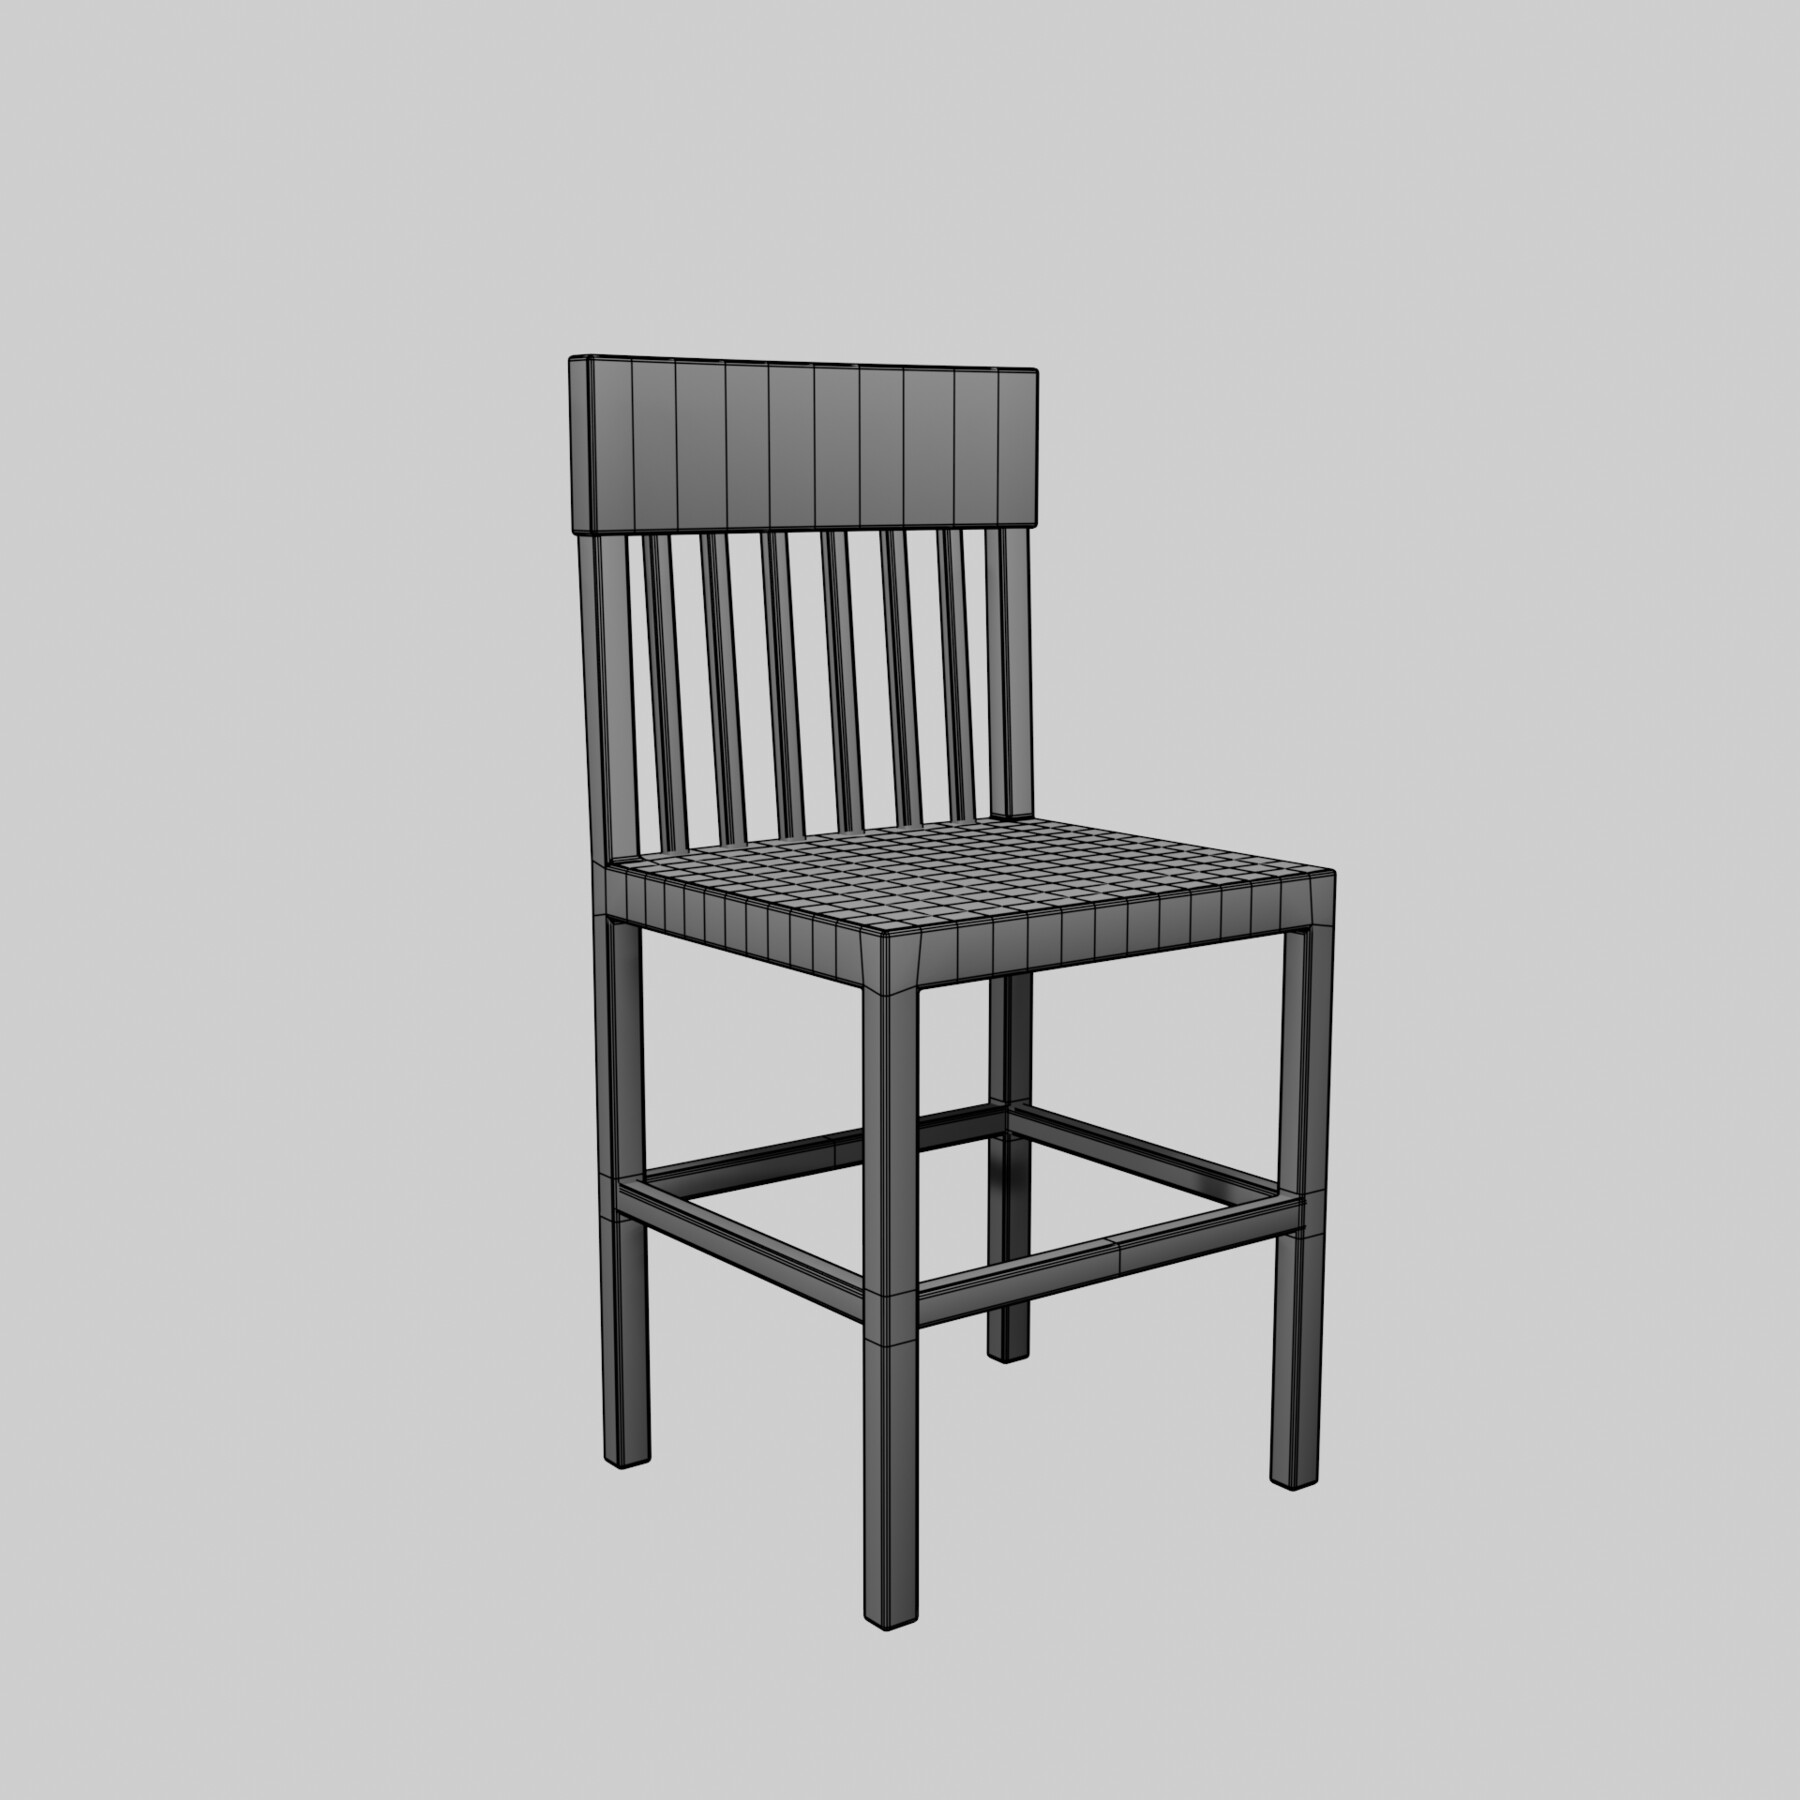 ArtStation - Wooden chair | Resources